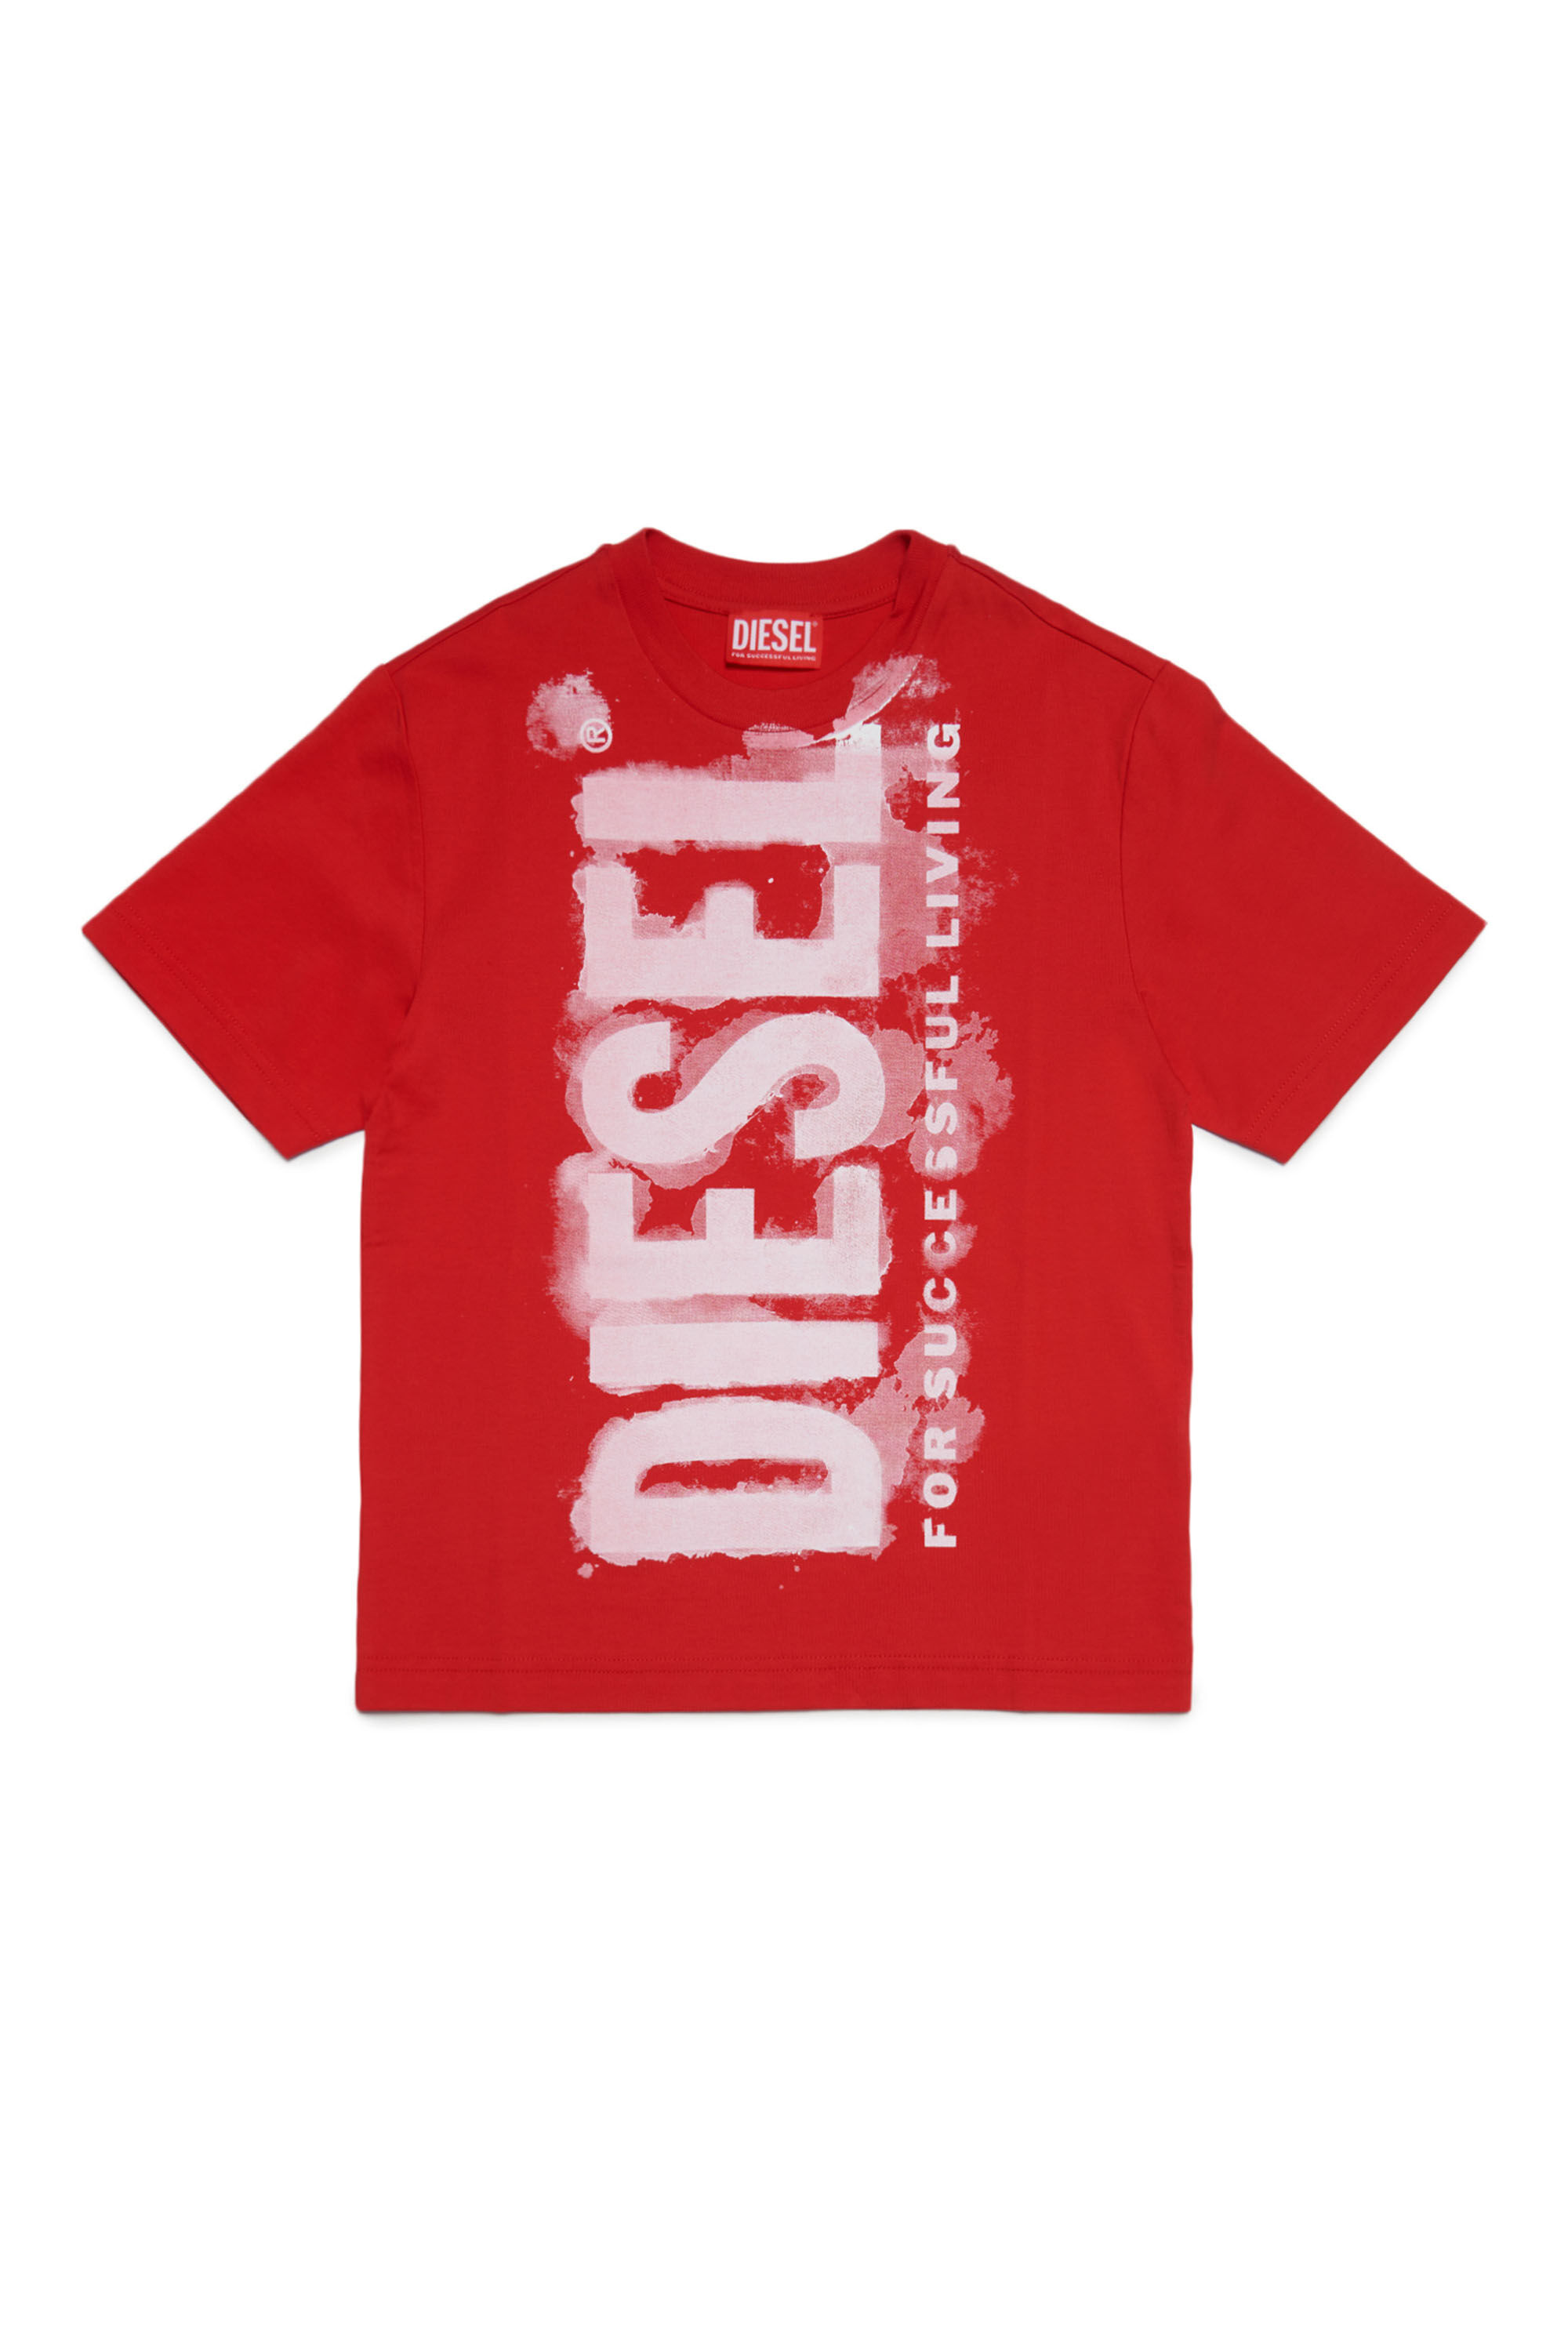 Diesel - TJUSTE16 OVER, Rojo - Image 1